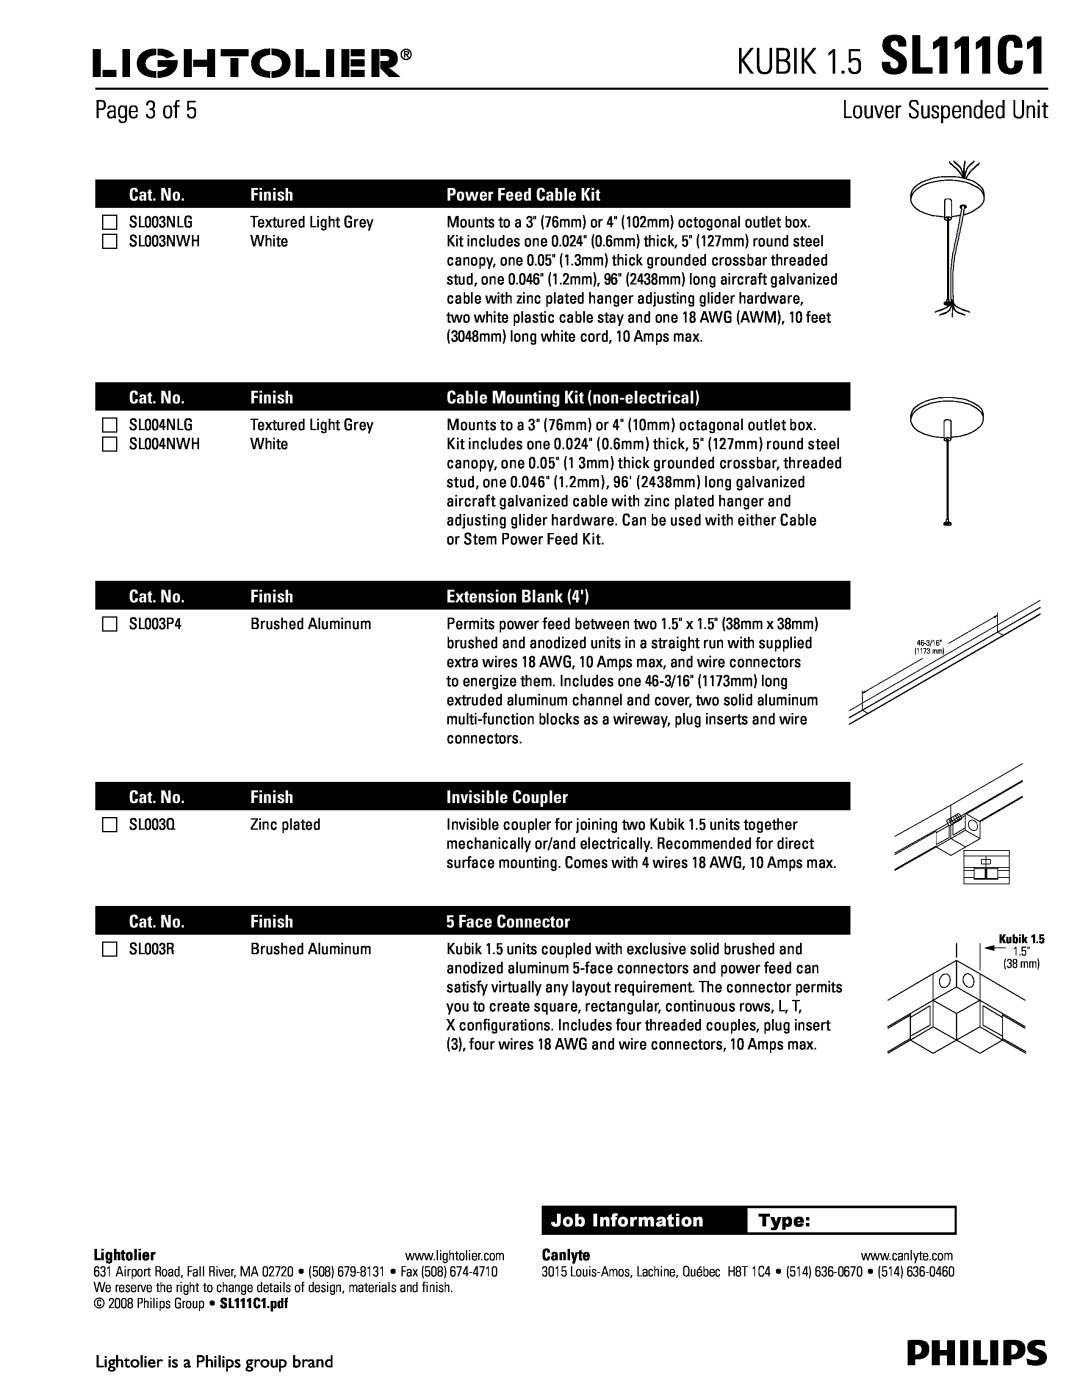 Lightolier dimensions Page 3 of, KUBIK 1.5 SL111C1, Louver Suspended Unit, Type 